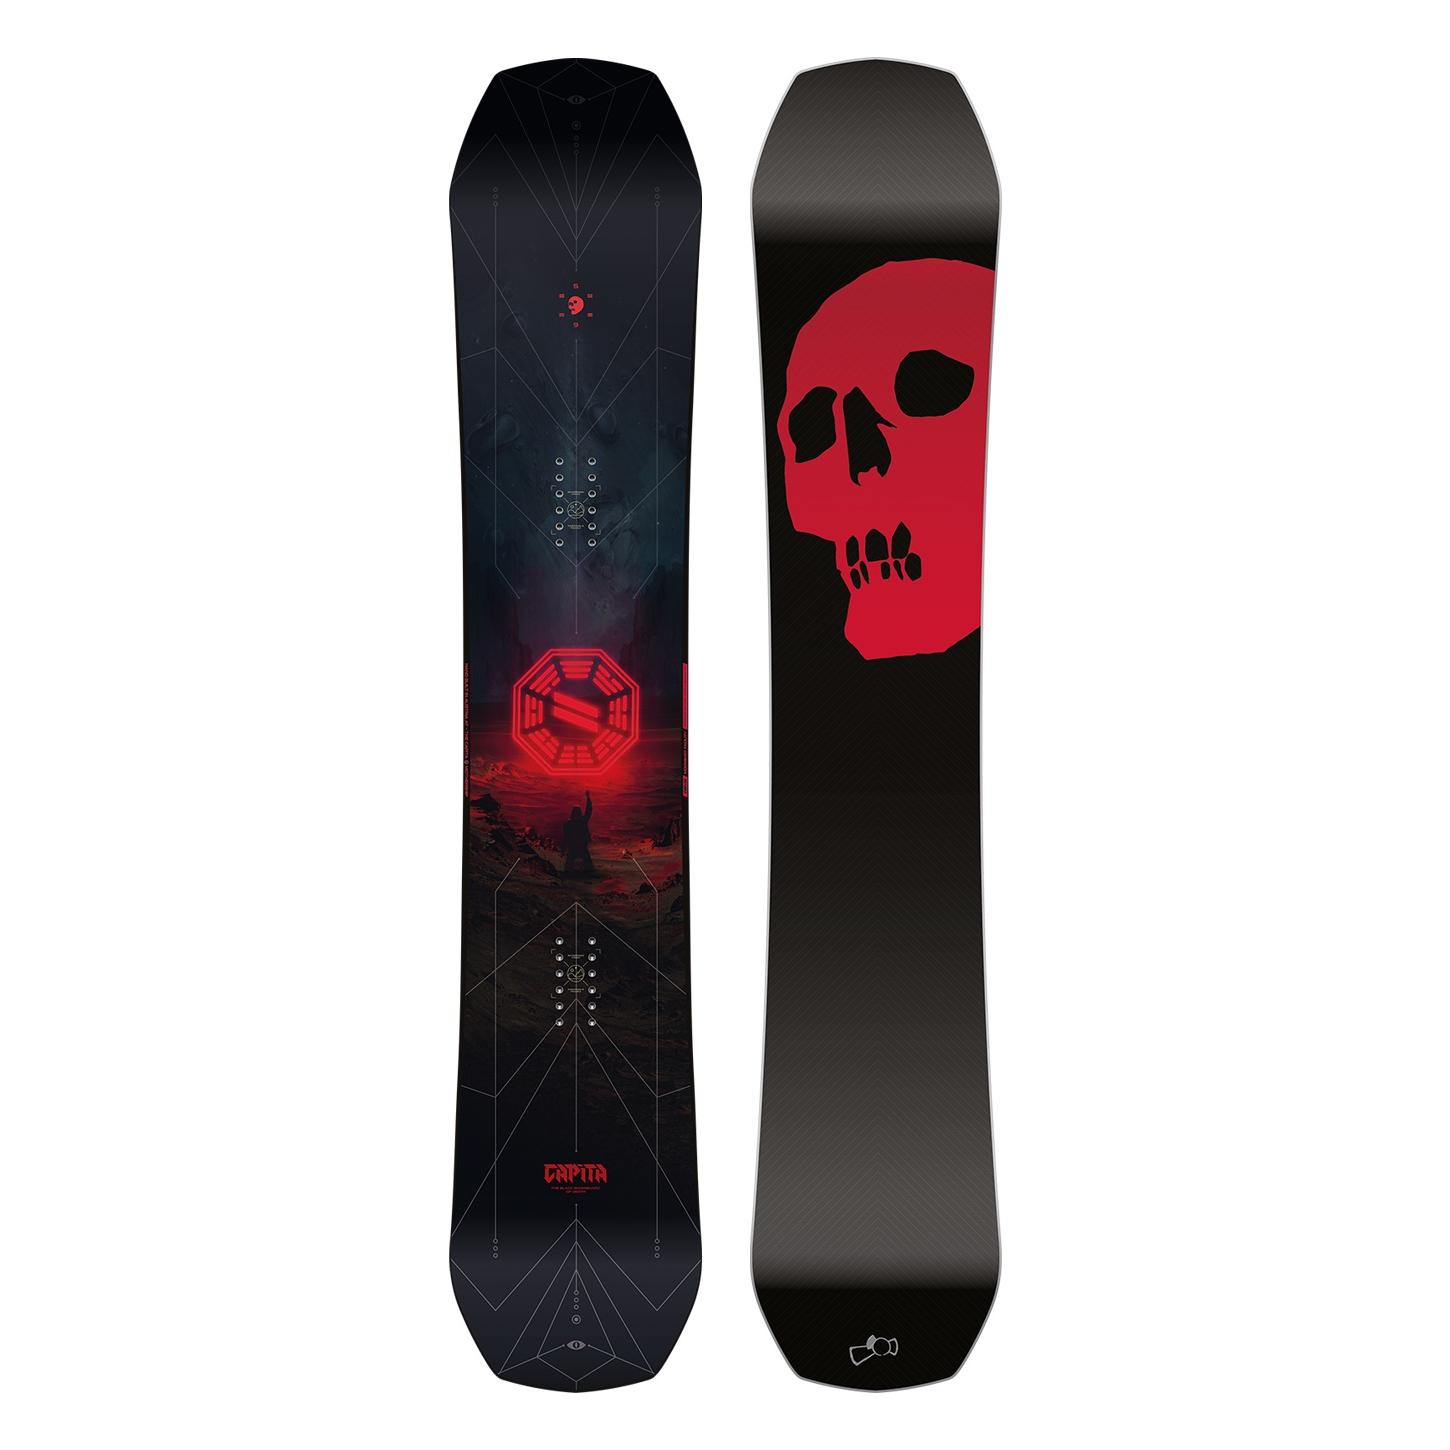 Сноуборд Capita Black snowboard of death 2019-20